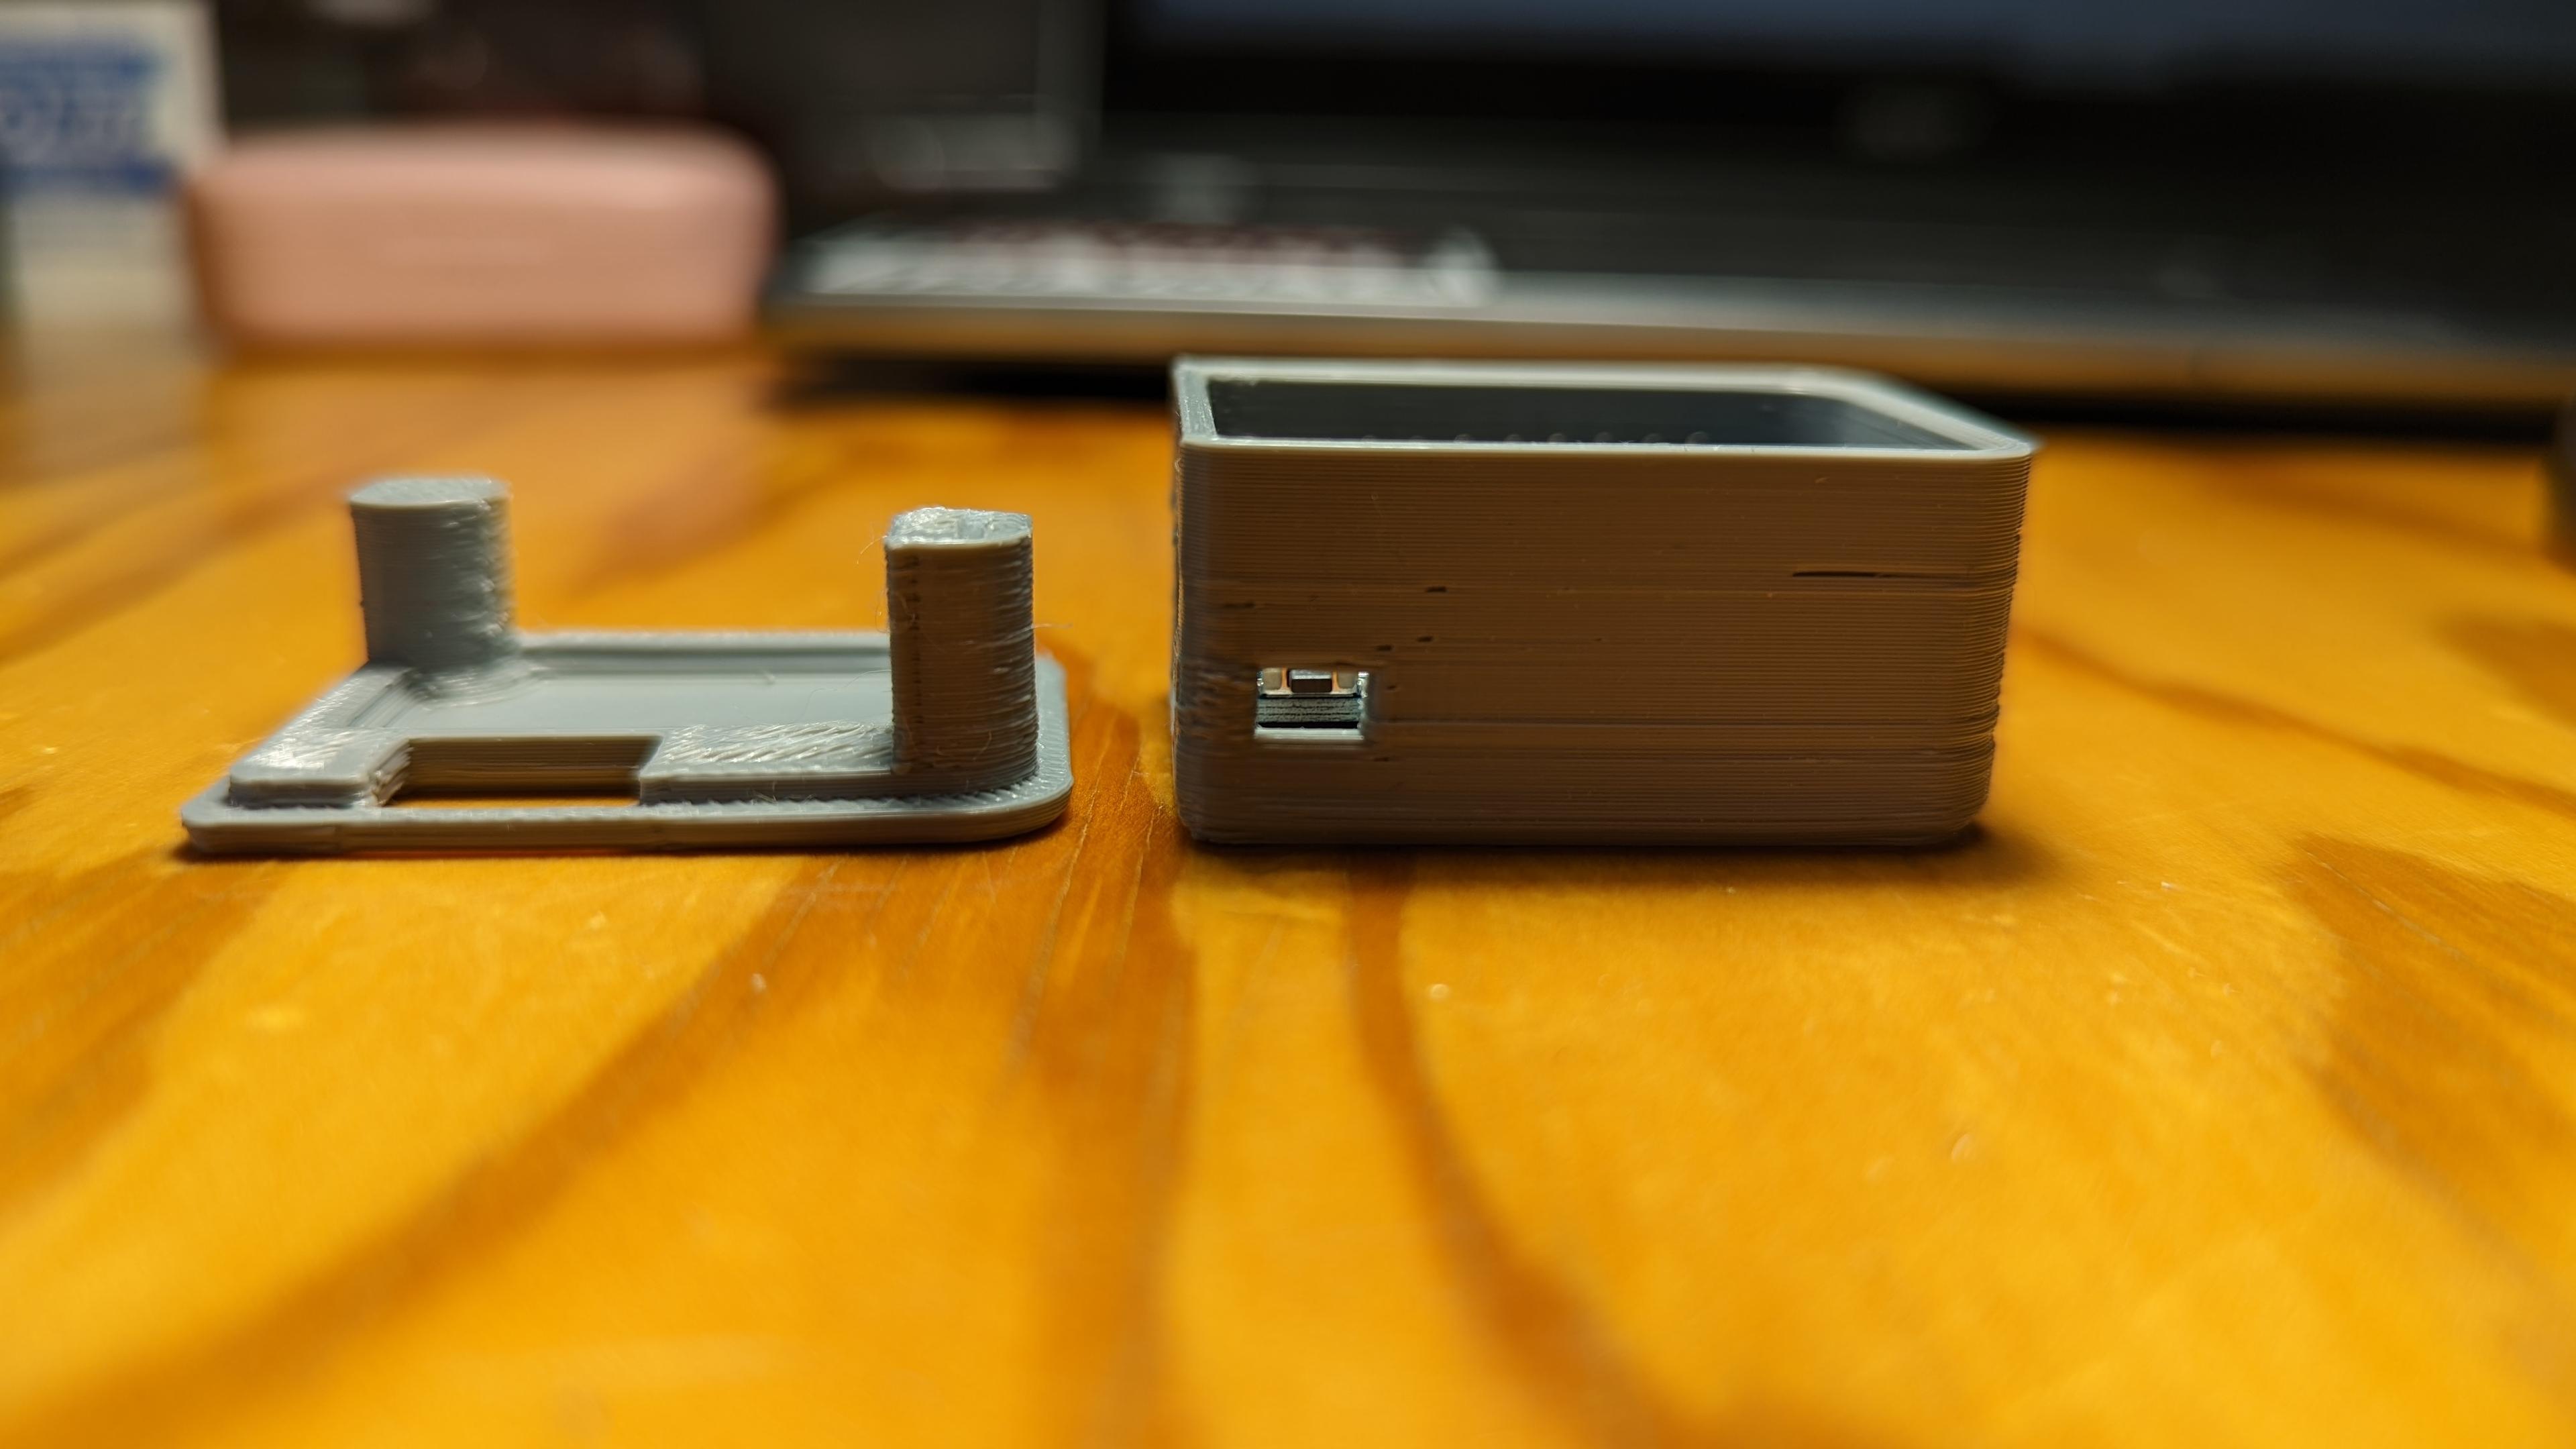 WEMOS D1 mini Project Box / Case 3d model